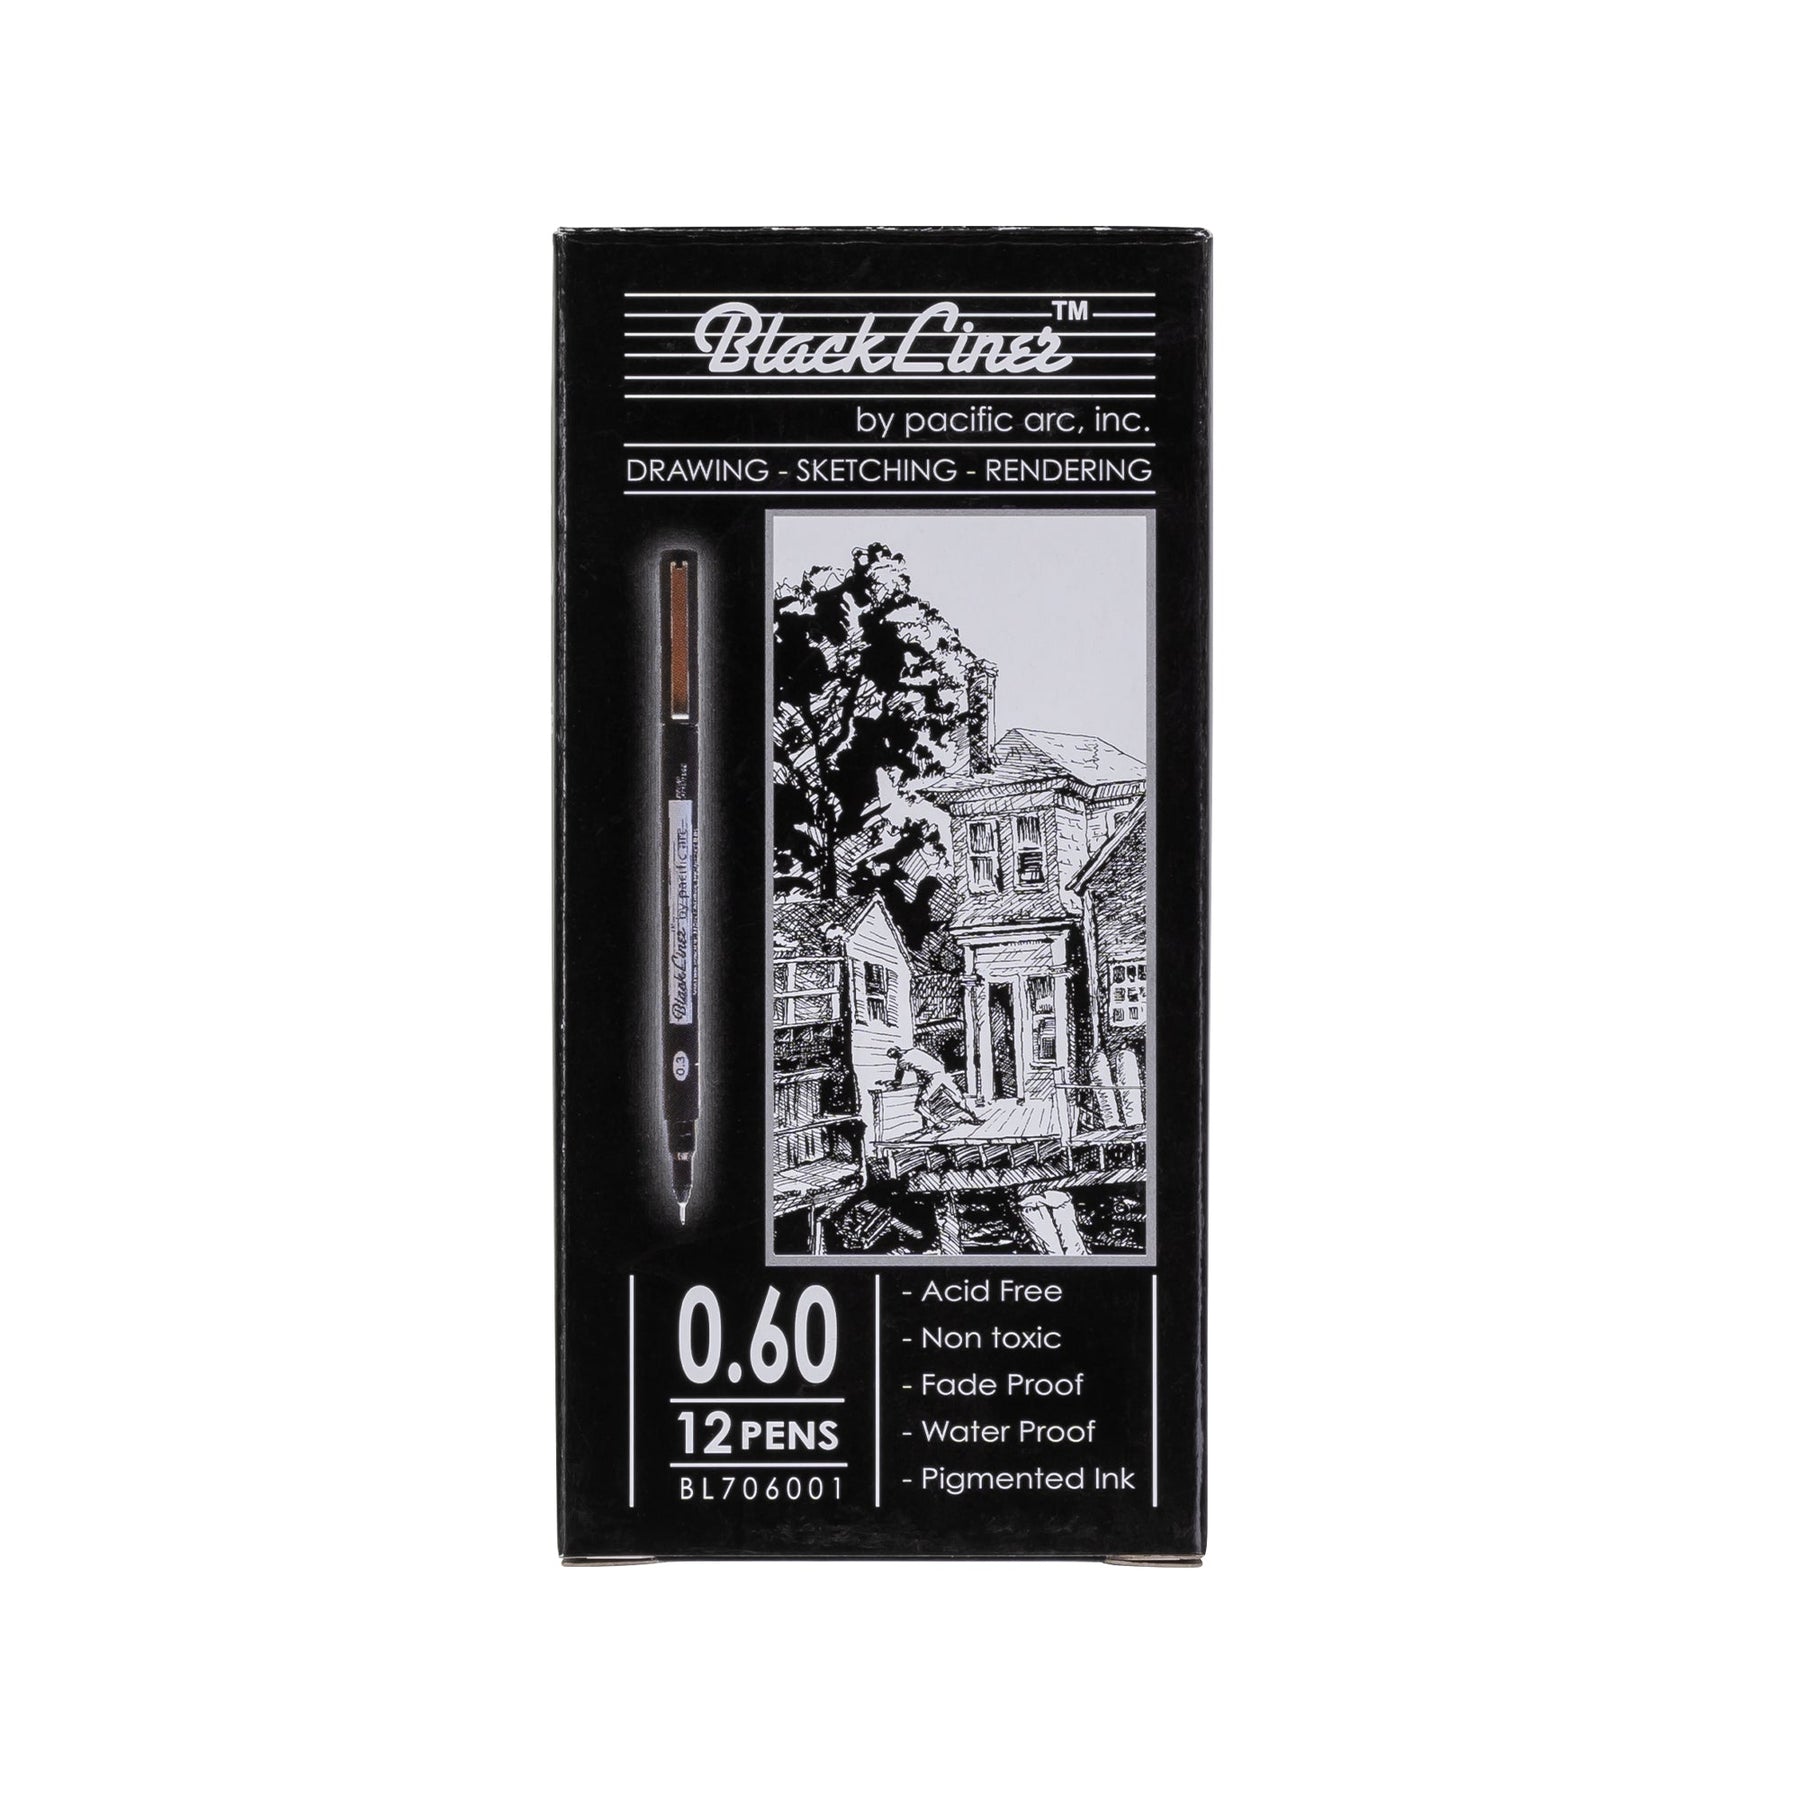 10 x 0.3mm Fineliners Pens BLACK Fine Line Pens Fine Liner Draw Write Sketch